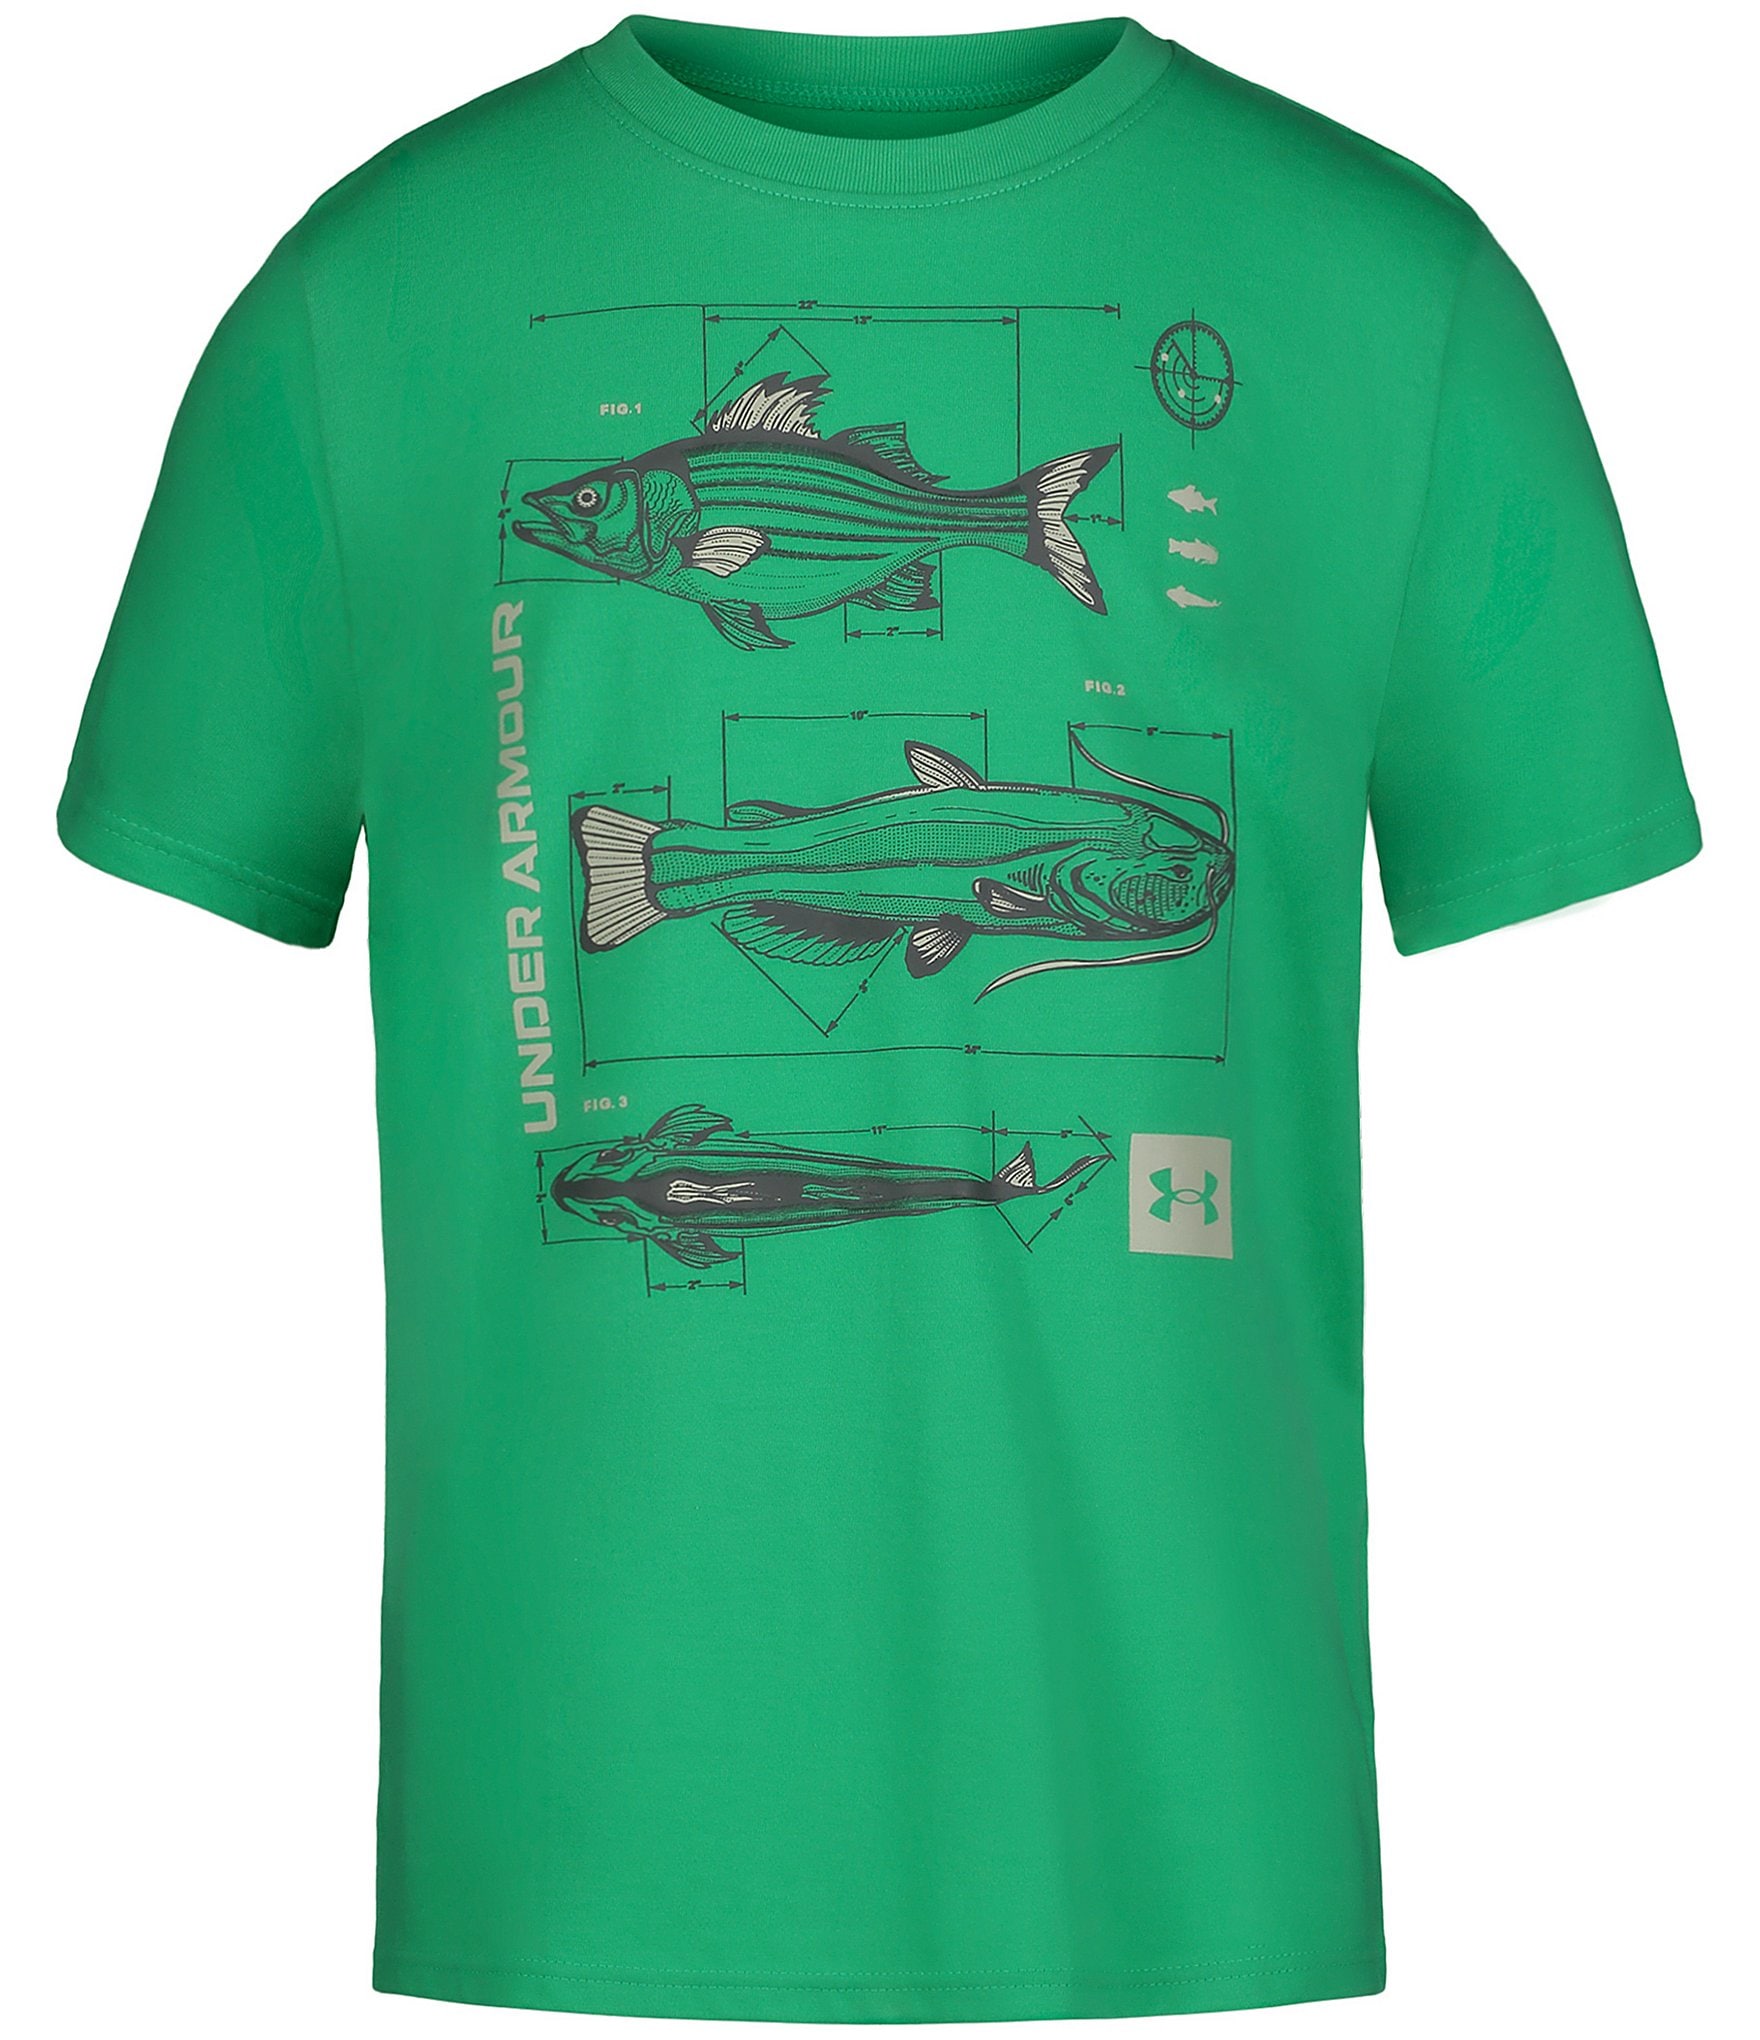 Under Armour Boys' Technical Fish T-Shirt - Green, YSM